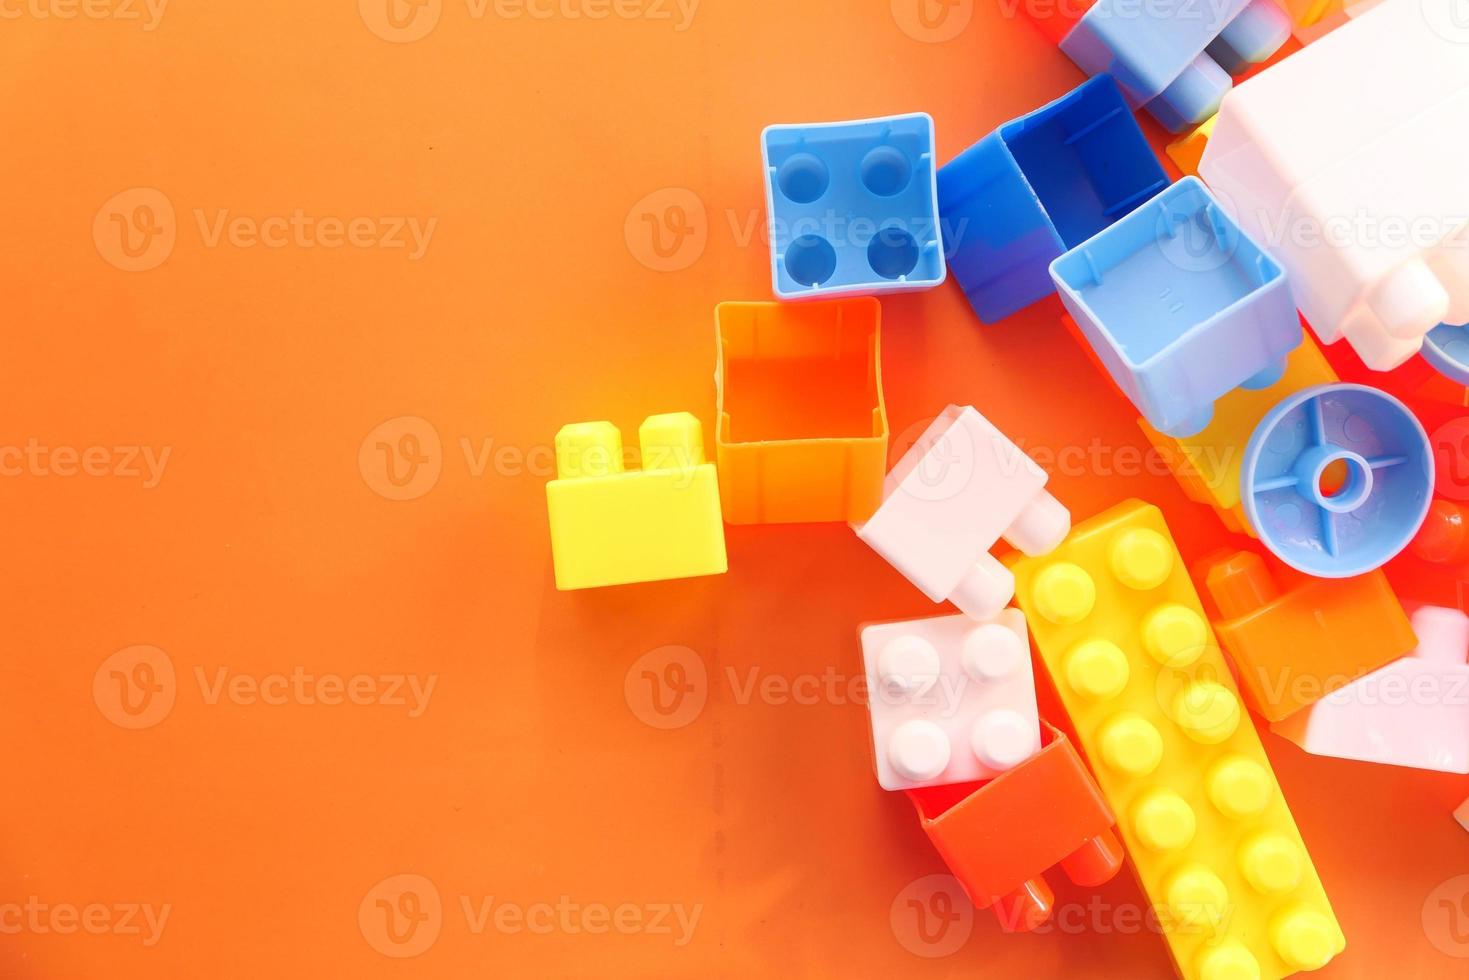 Colorful building blocks on orange table, close up photo